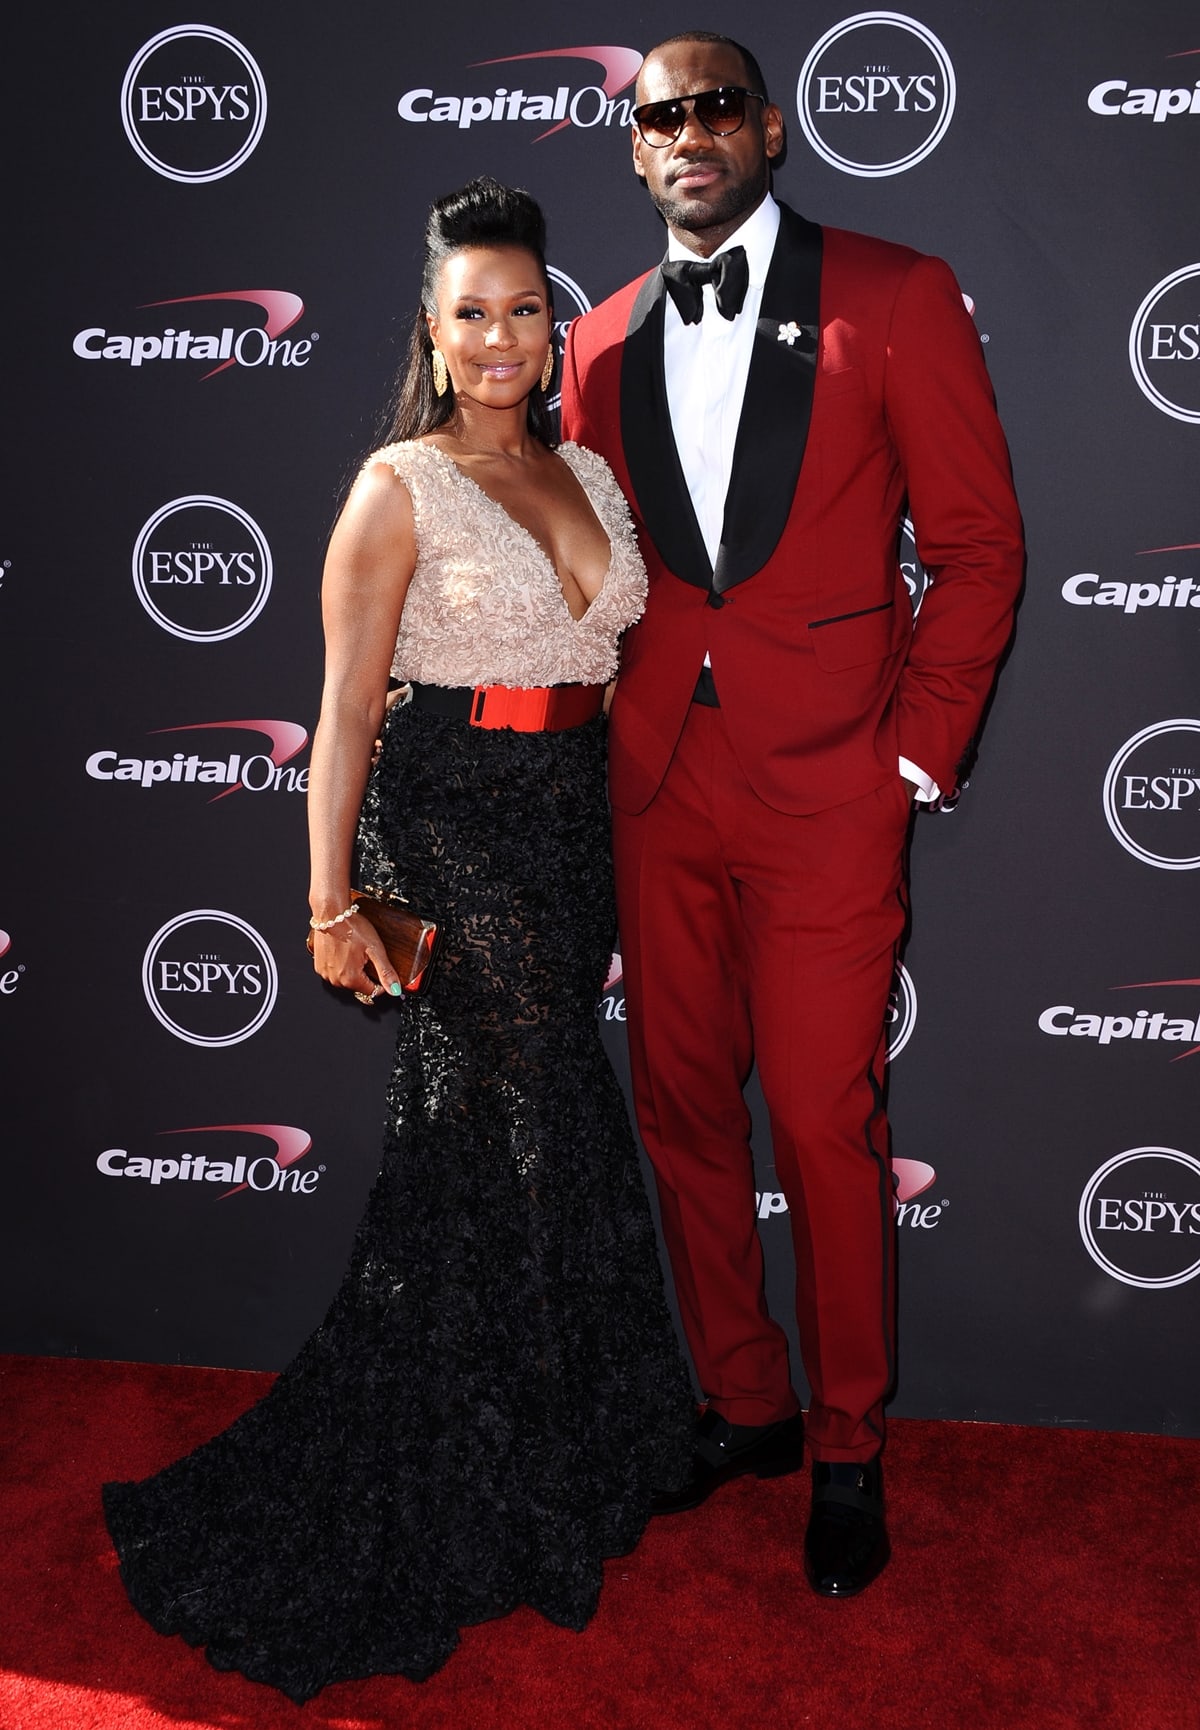 NBA player LeBron James and his girlfriend Savannah Brinson